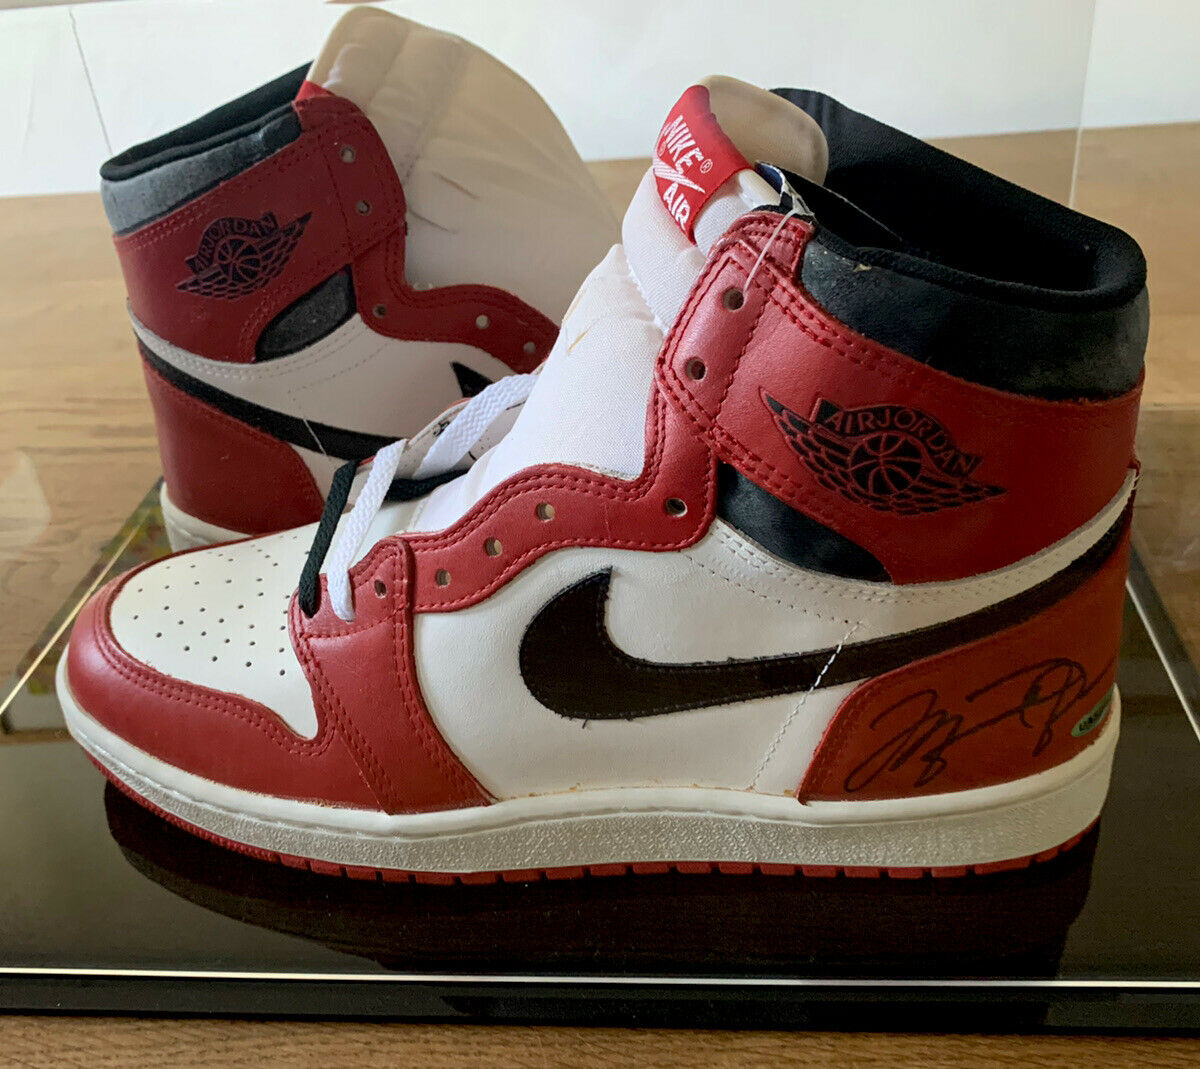 Michael Jordan's Signature Air Jordan Shoes From 1985 Sell For